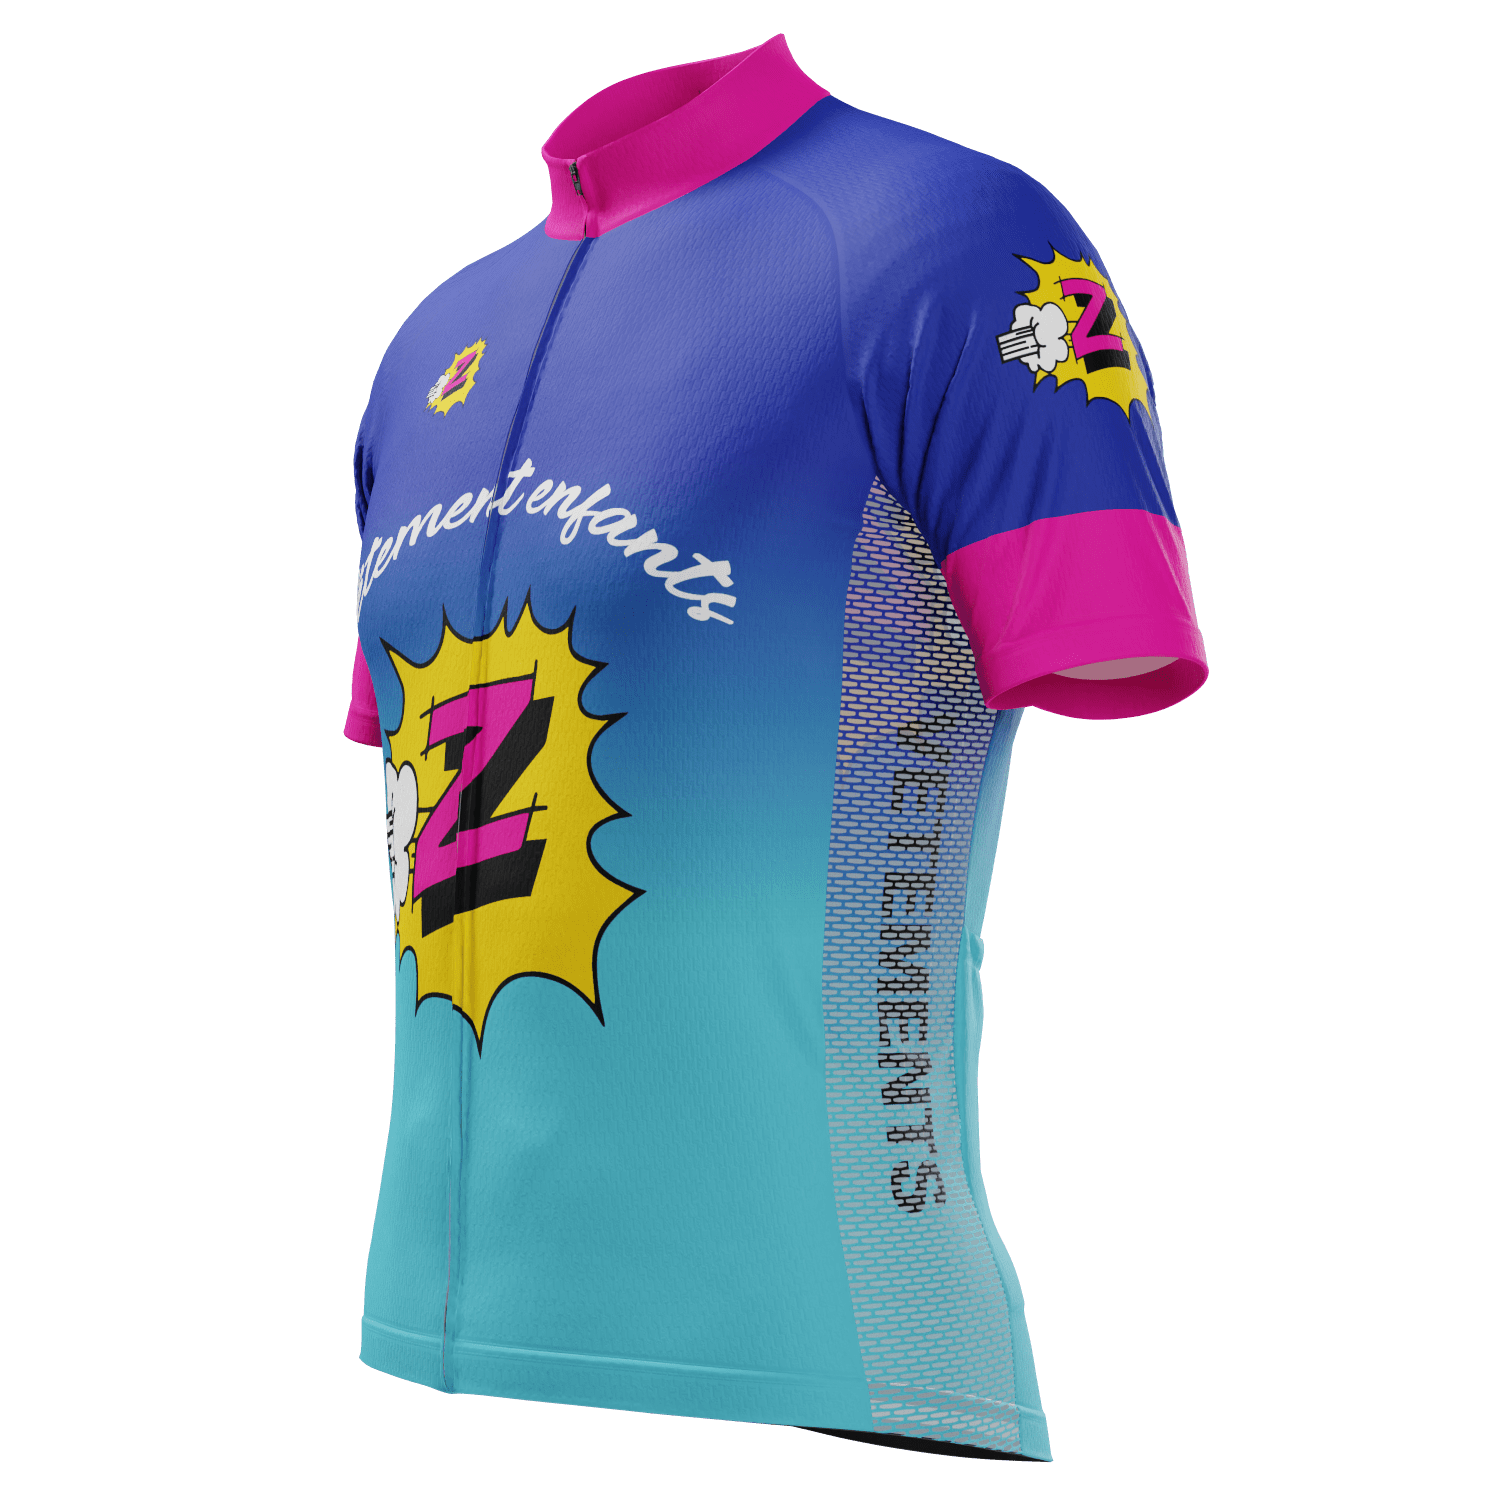 Men's Vetements Enfants Team Z Retro Short Sleeve Cycling Jersey